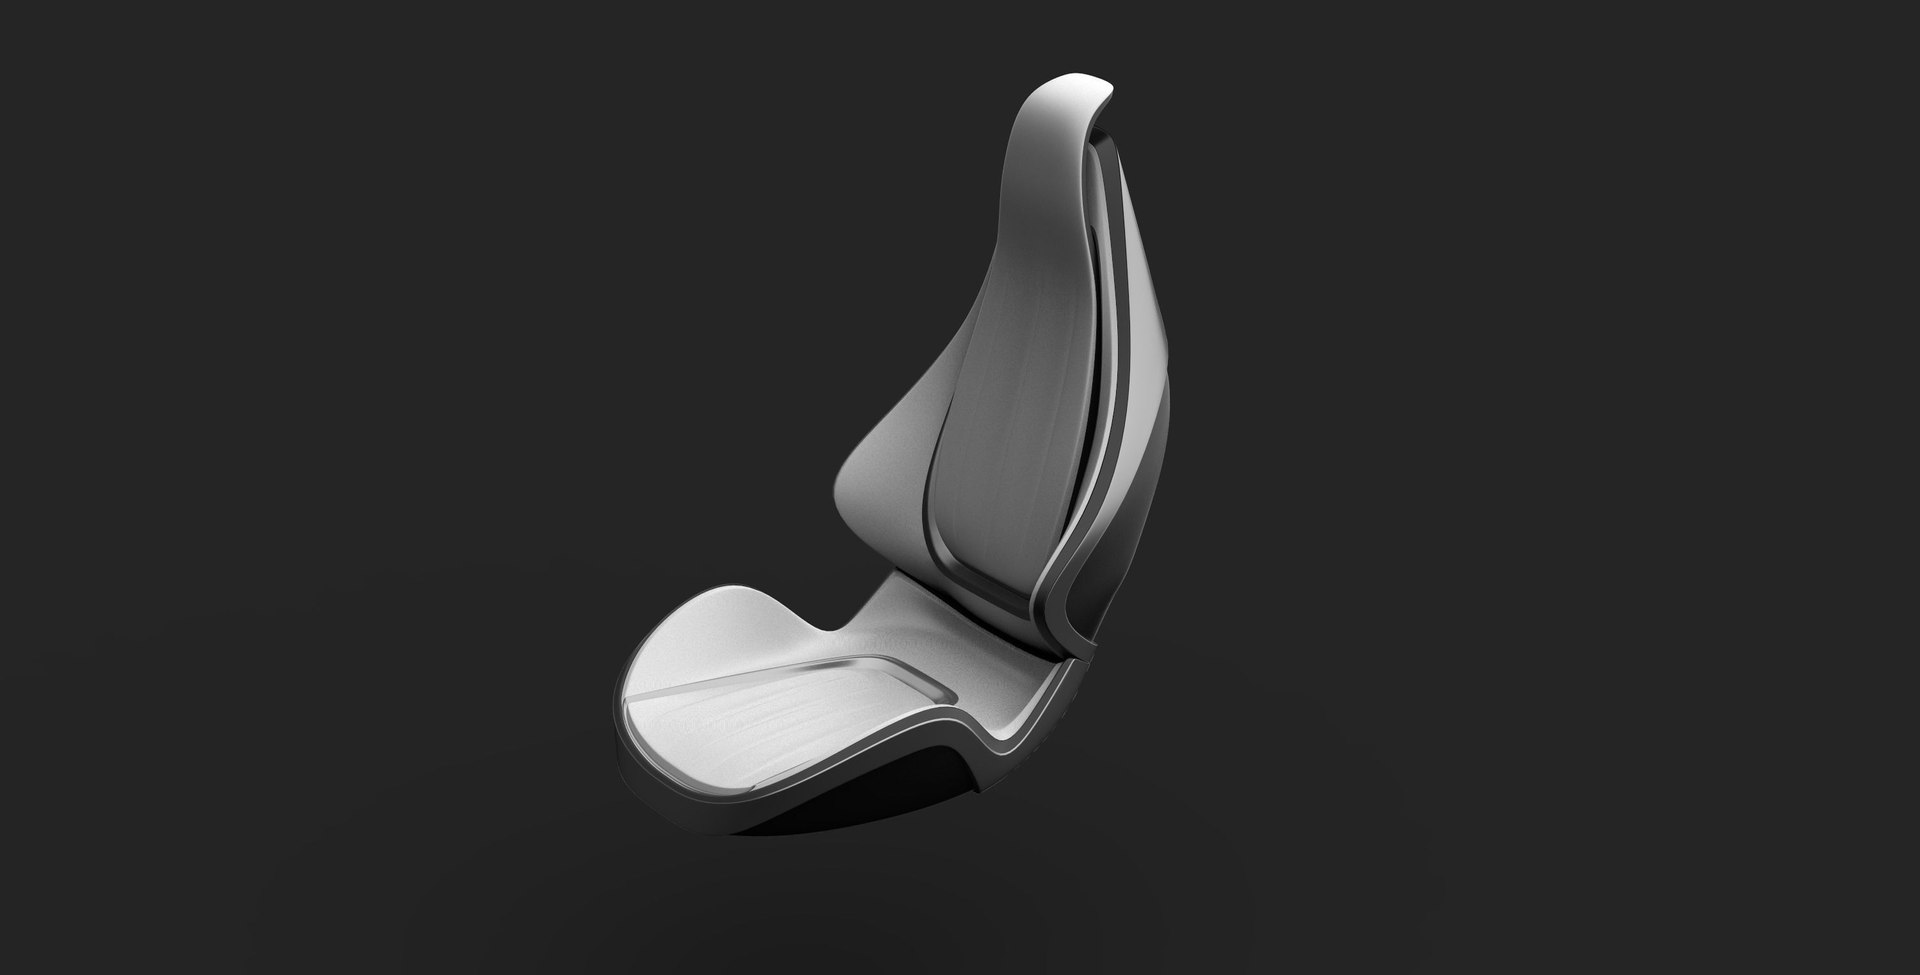 Concept seats 3D model - TurboSquid 1289659